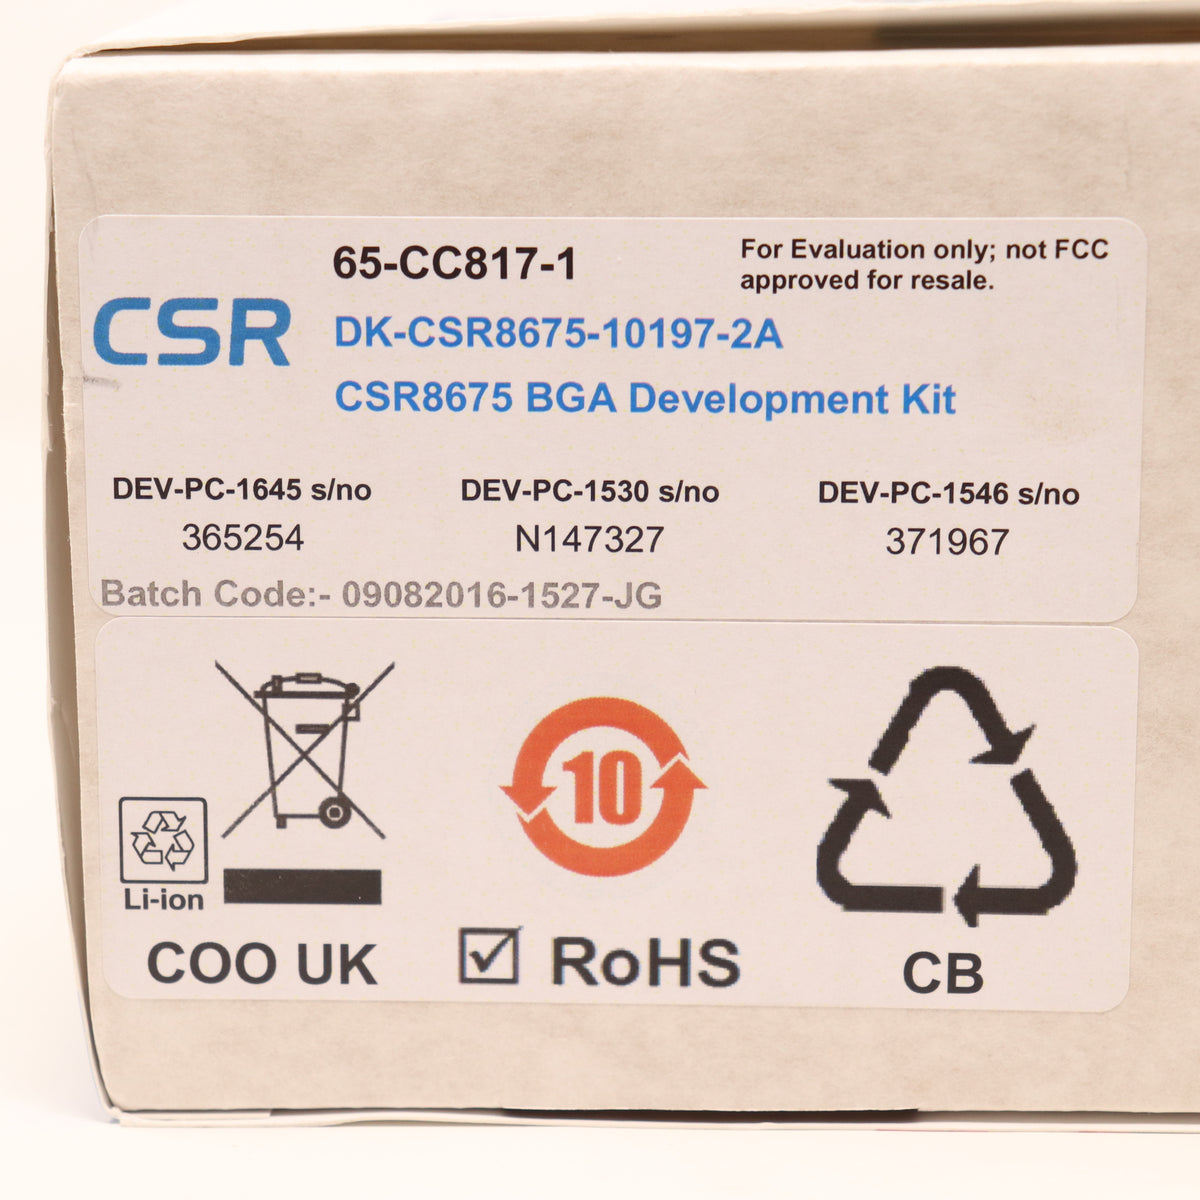 Qualcomm CSR DK-CSR8675-10197-2A CSR8675 Series Bluetooth Transceiver Development Kit